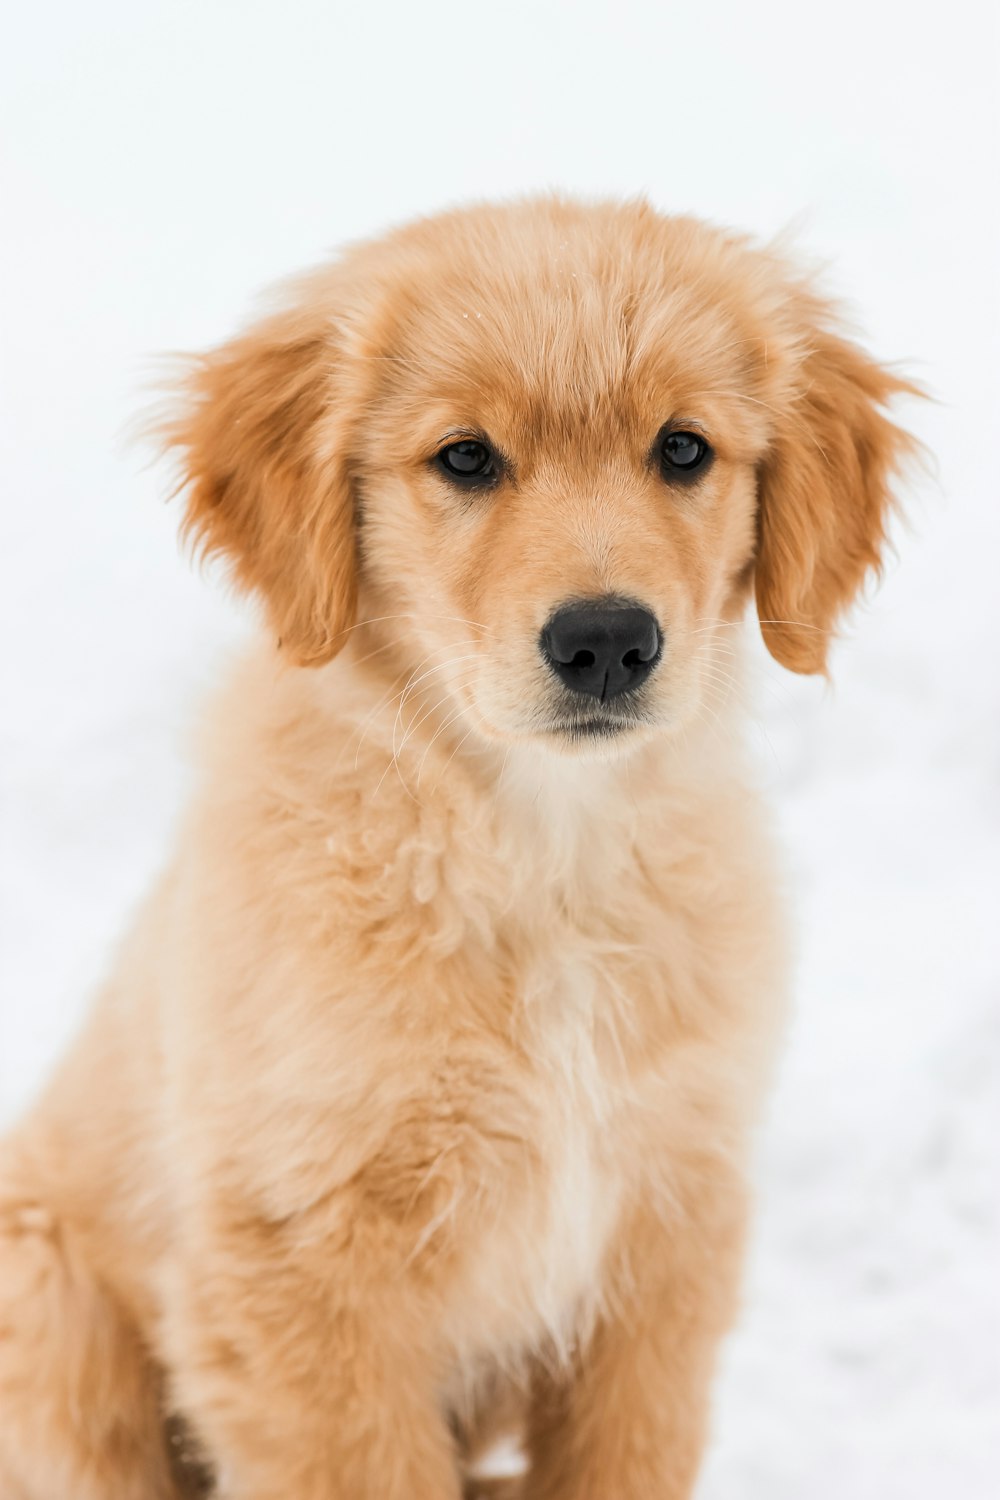 golden retriever puppy on snow covered ground